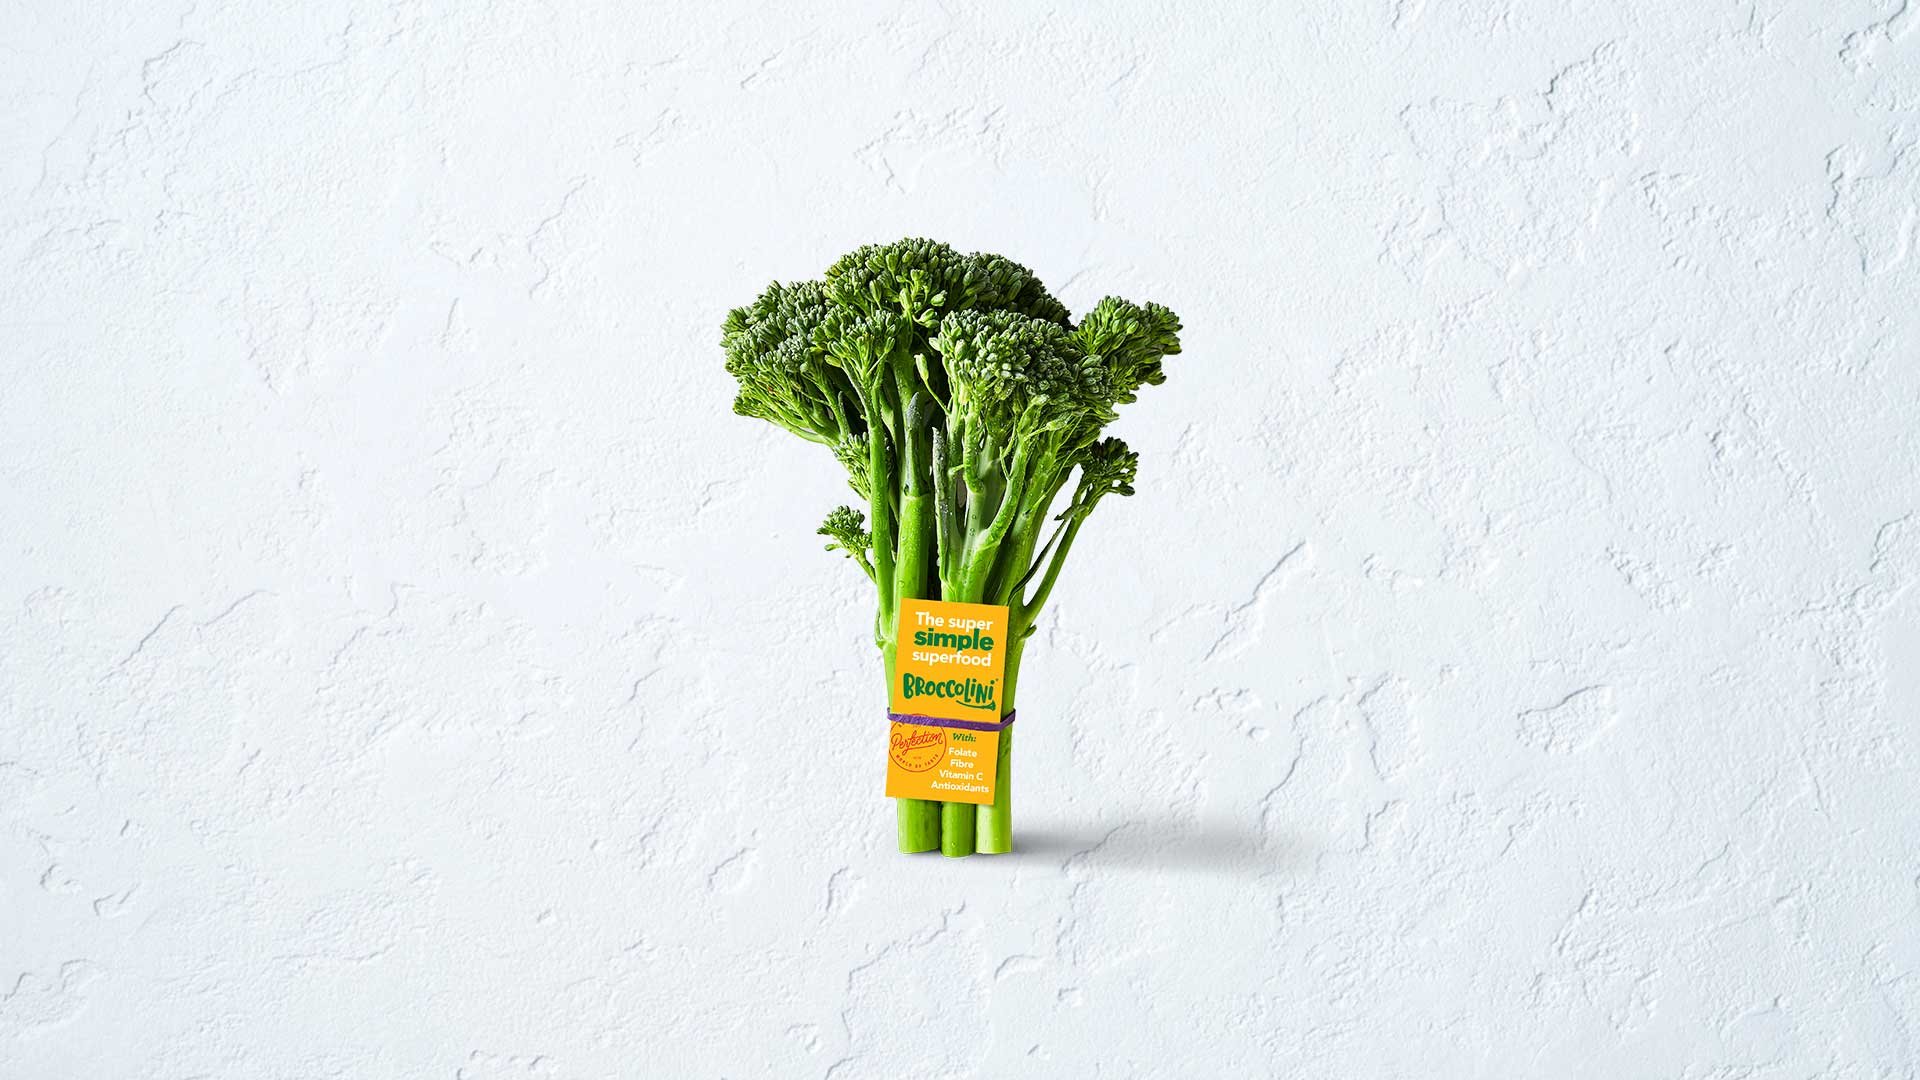 broccolini-bunch-header